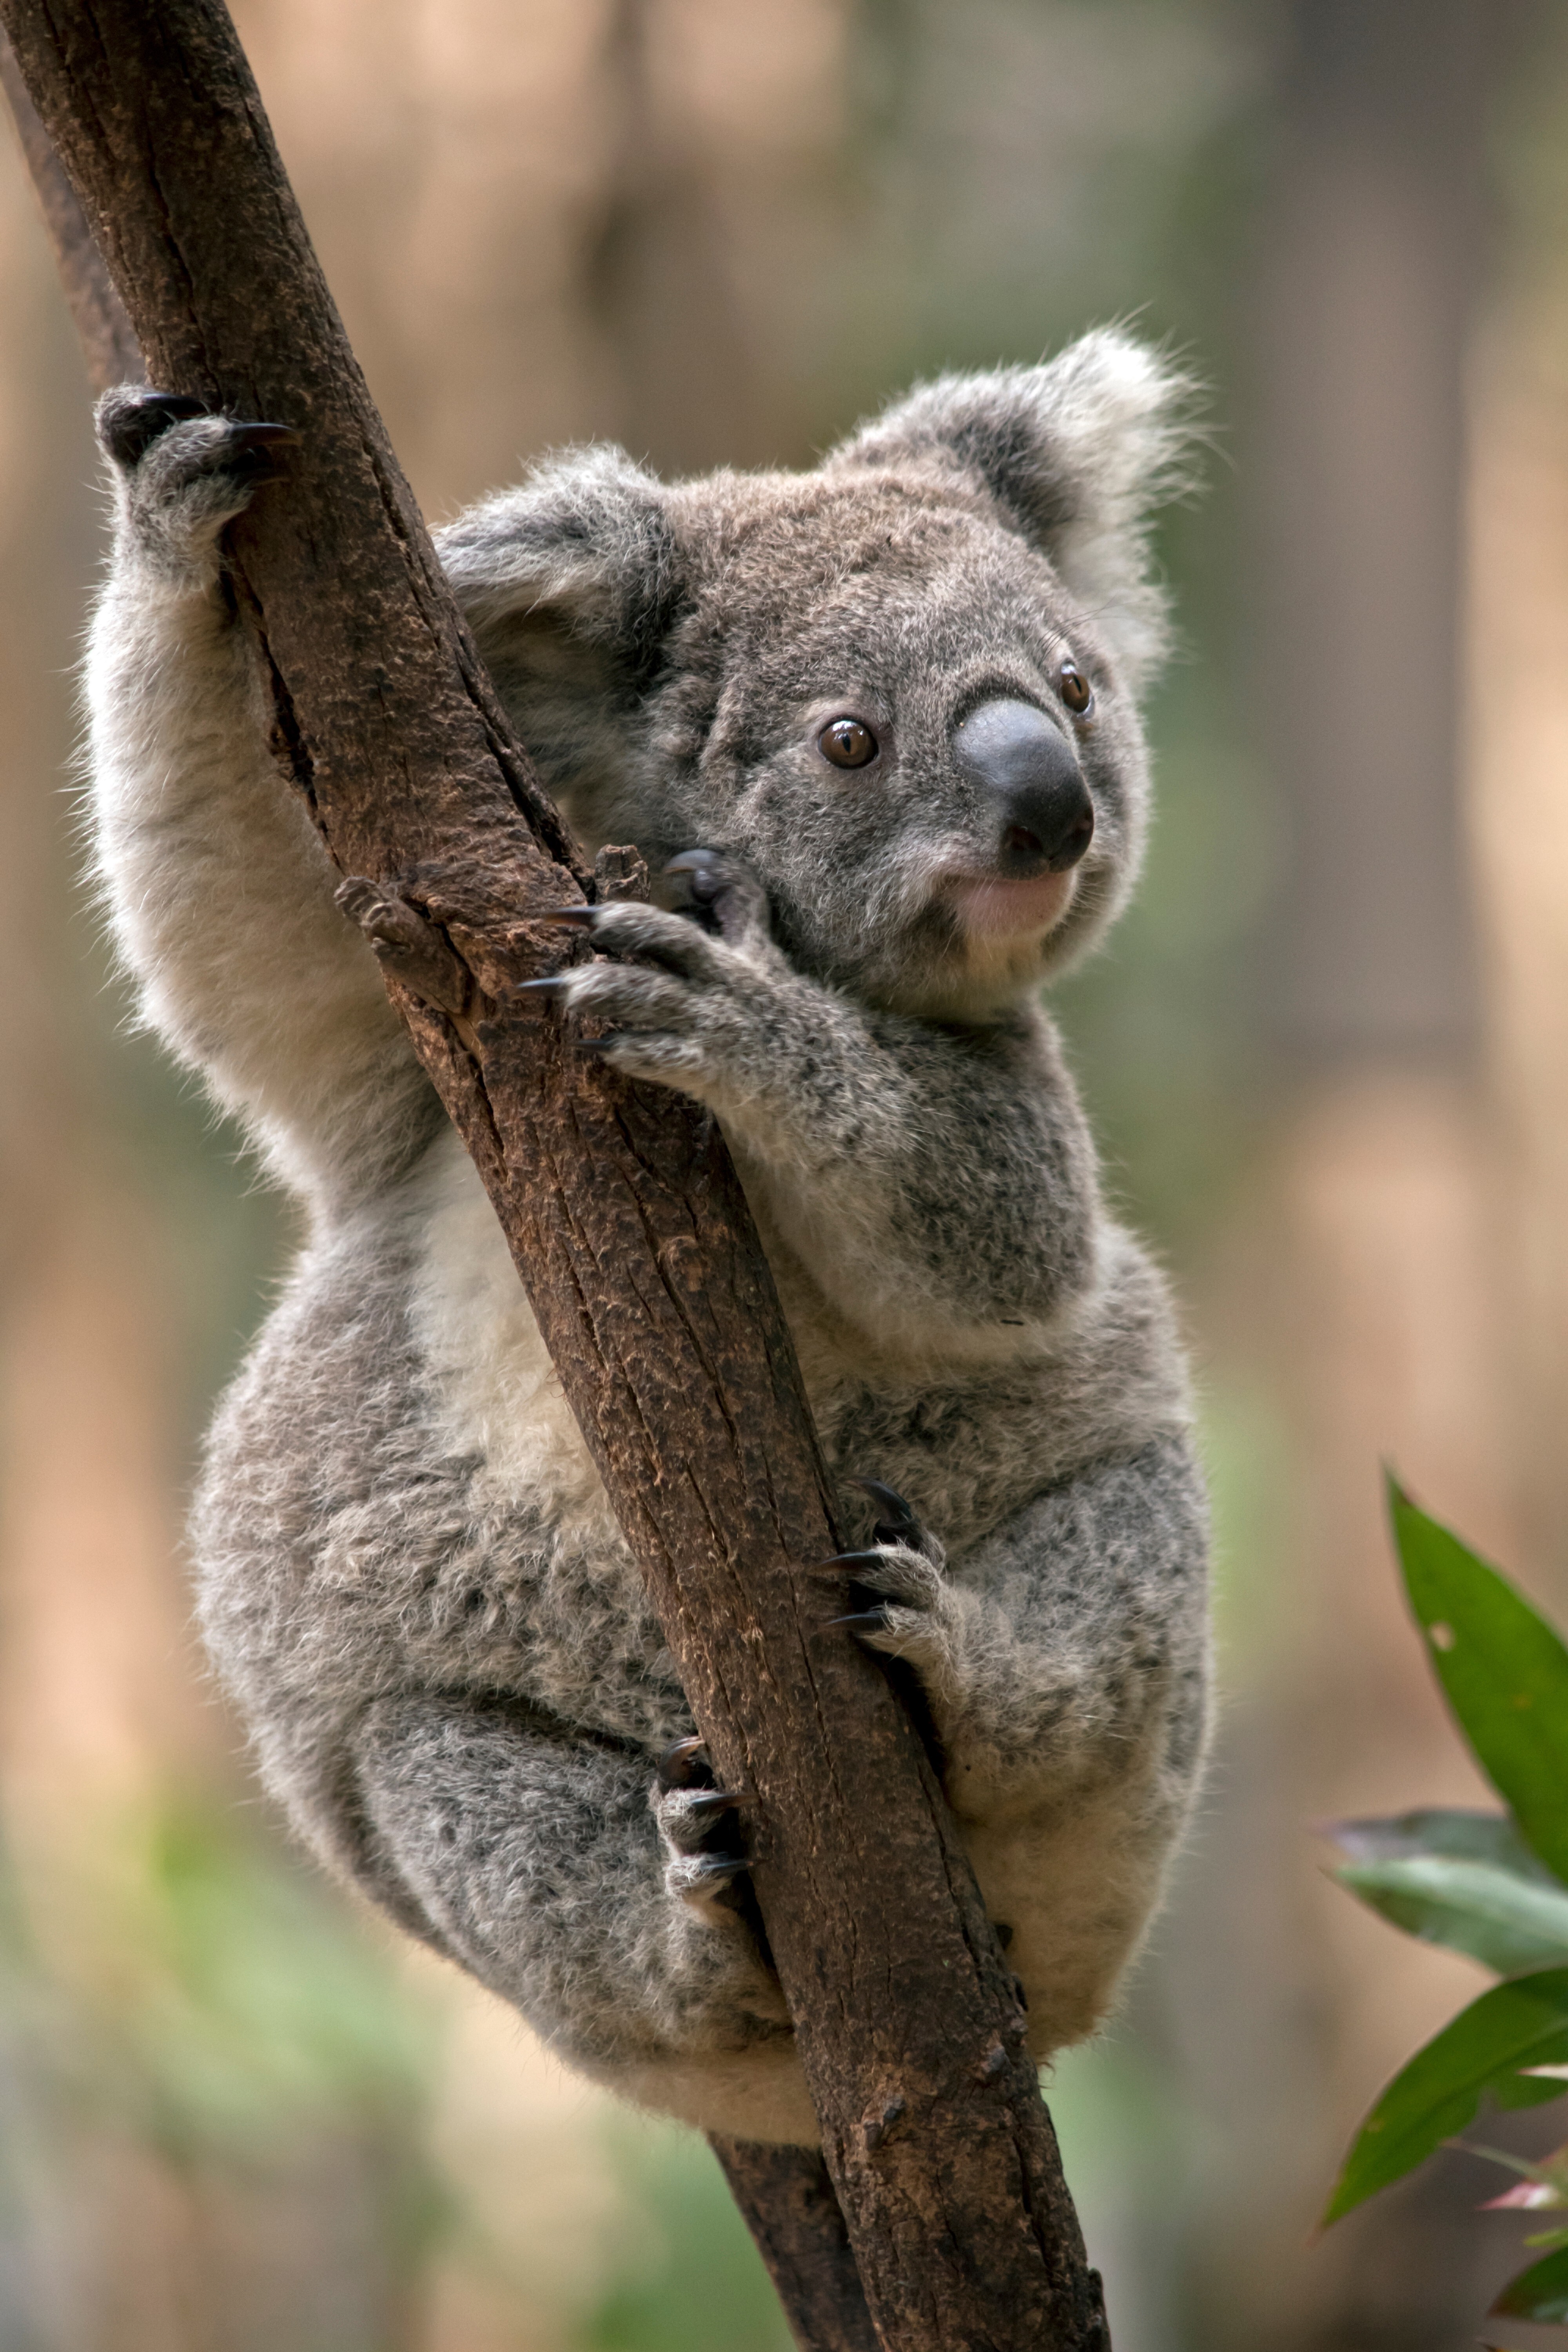 Koalas on Australia’s east coast face an endangered listing. Photo: Shutterstock